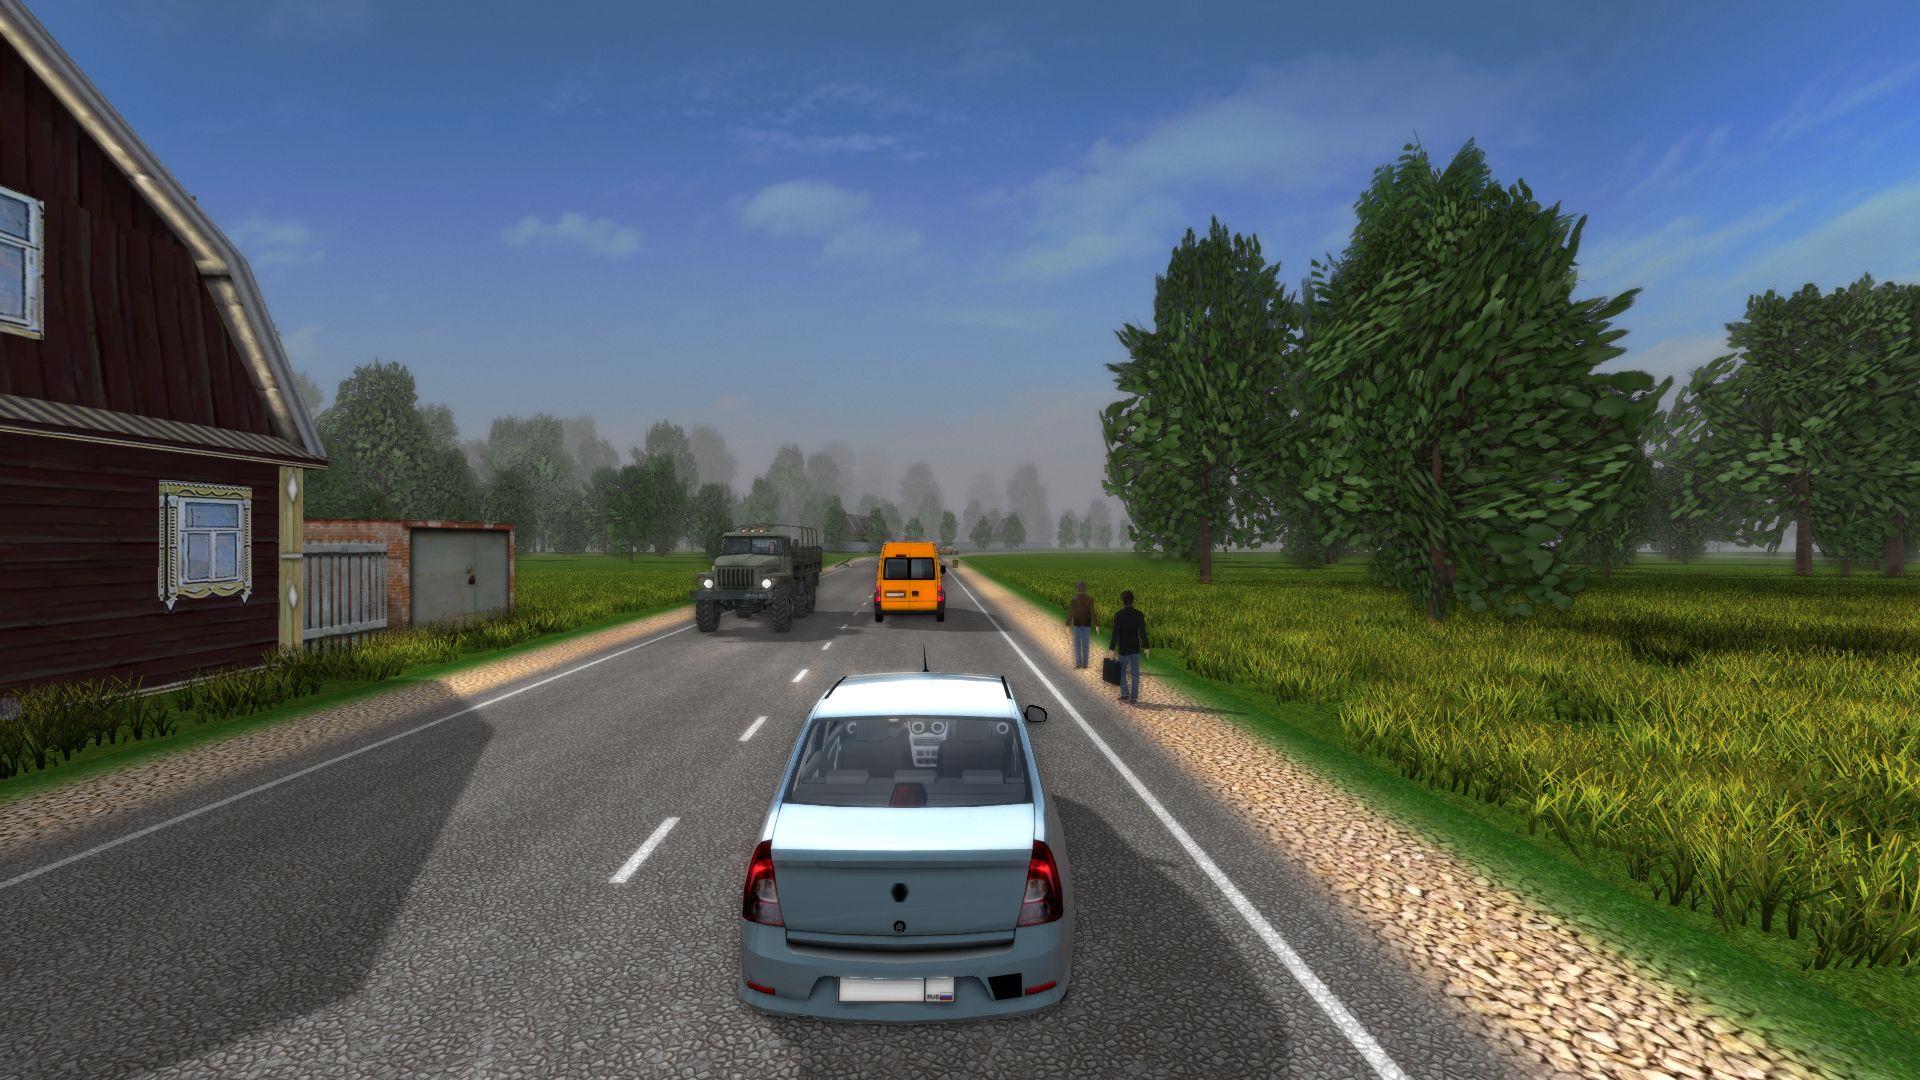 Screenshot №11 from game Drive Megapolis